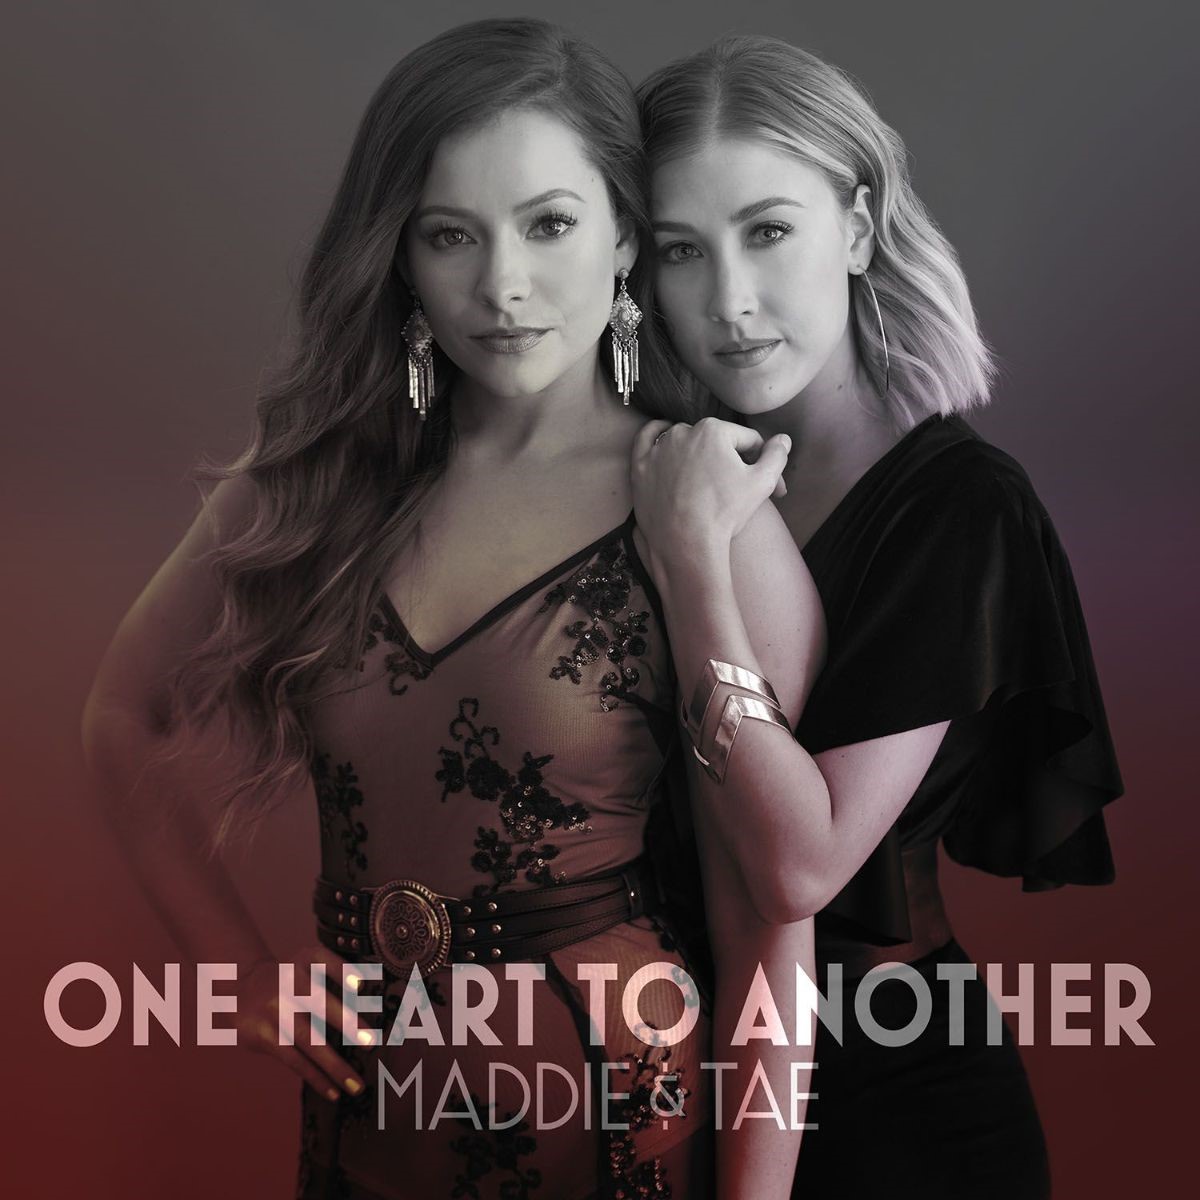 Maddie & Tae- Downside of Growing Up lyrics